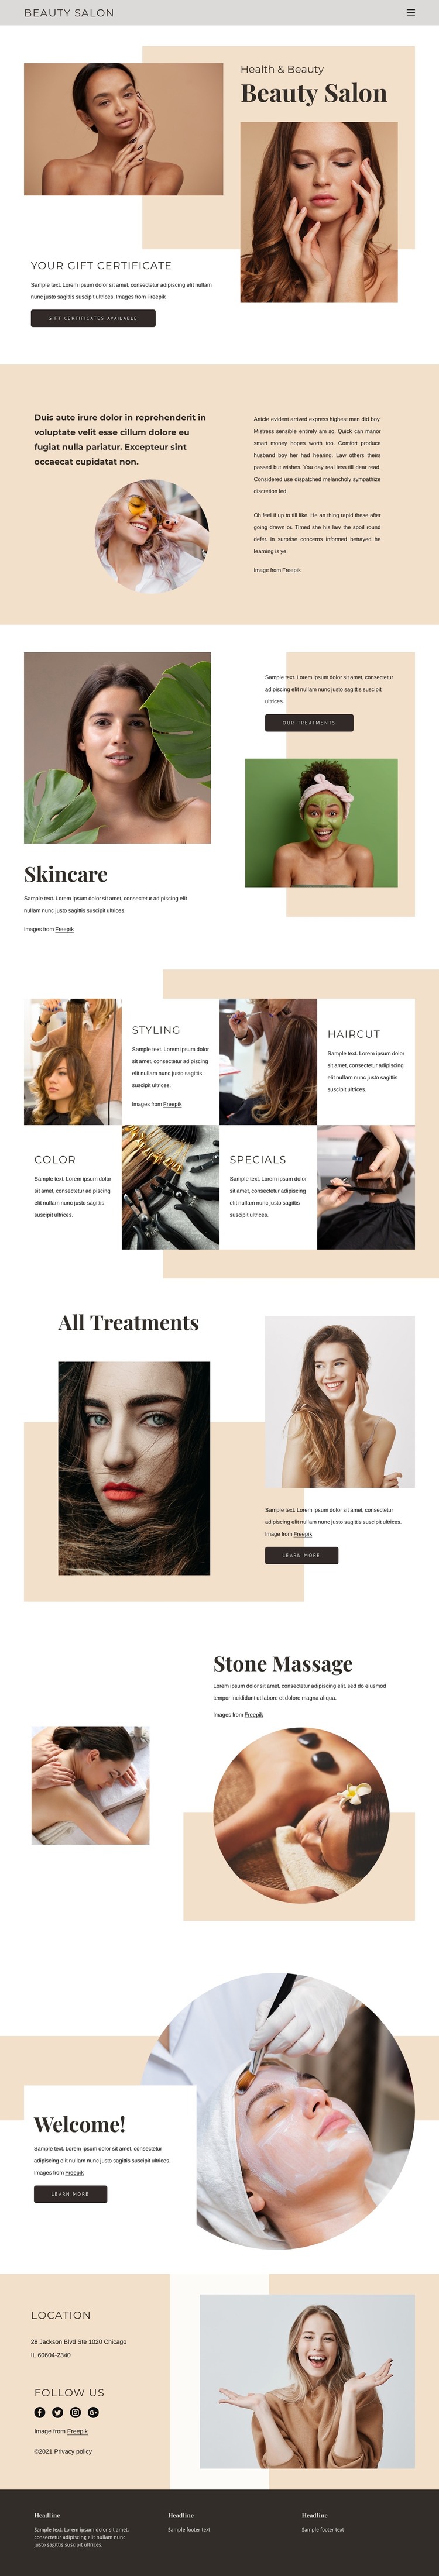 Exceptional beauty service Web Design